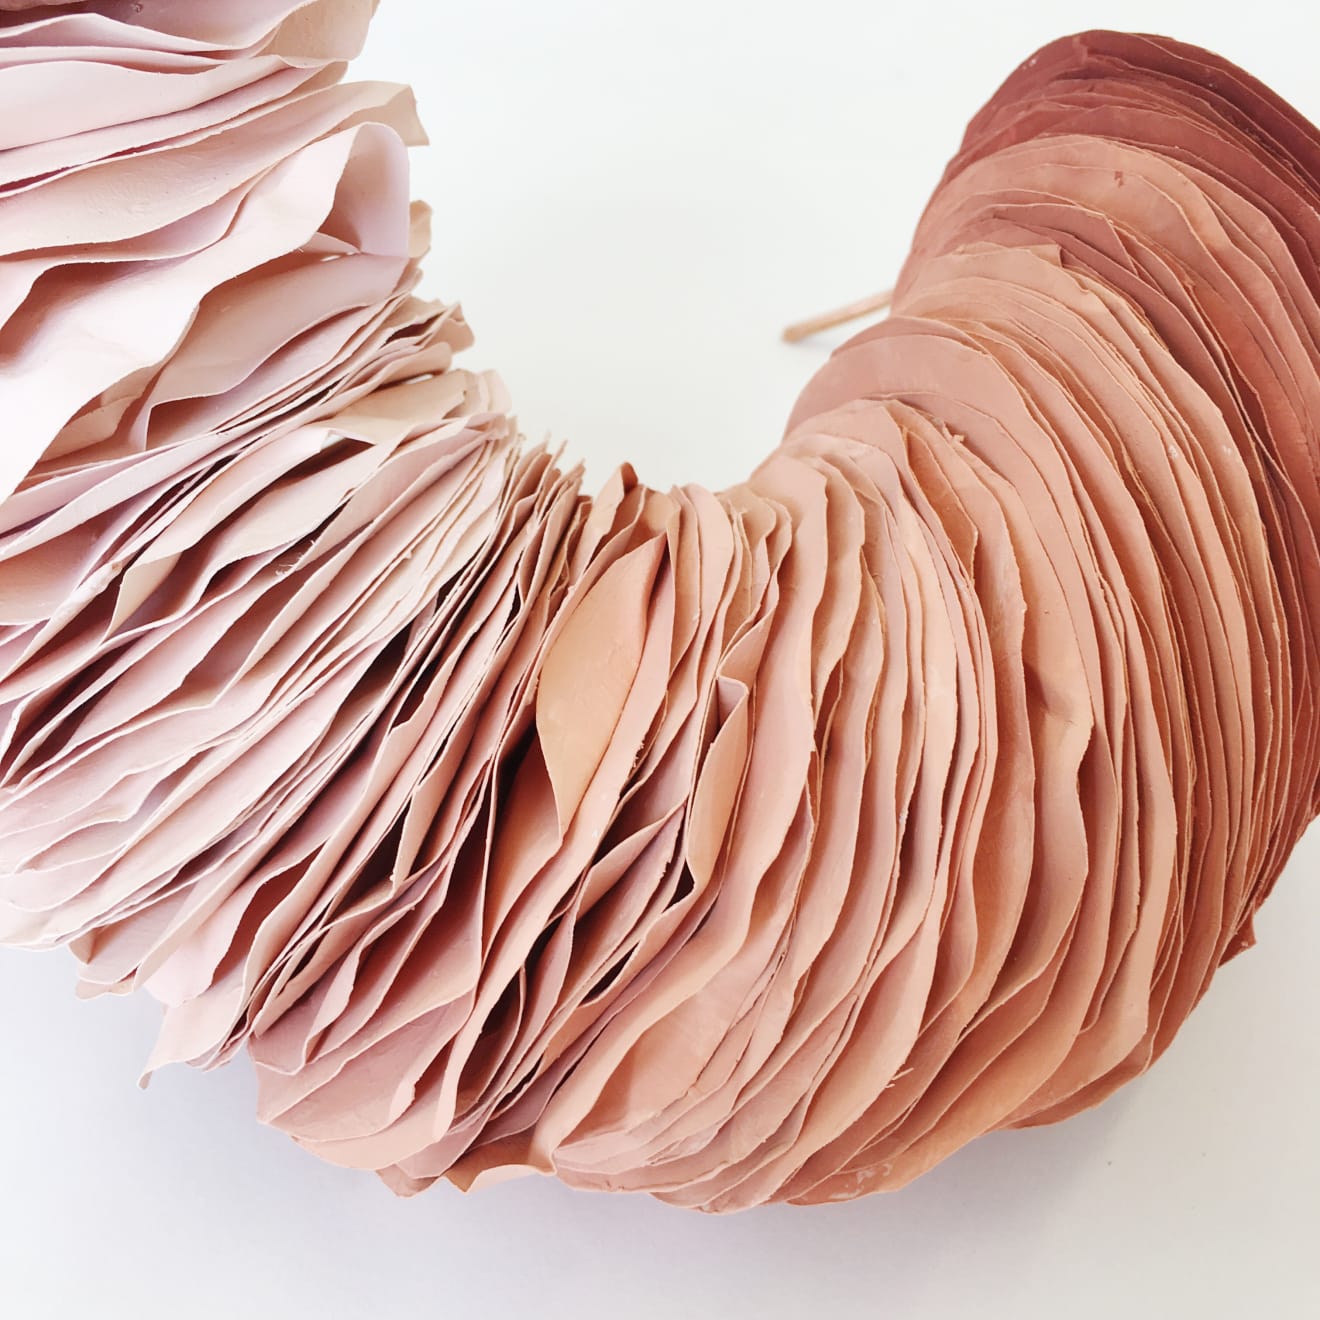 Blush paper sculpture, 2016